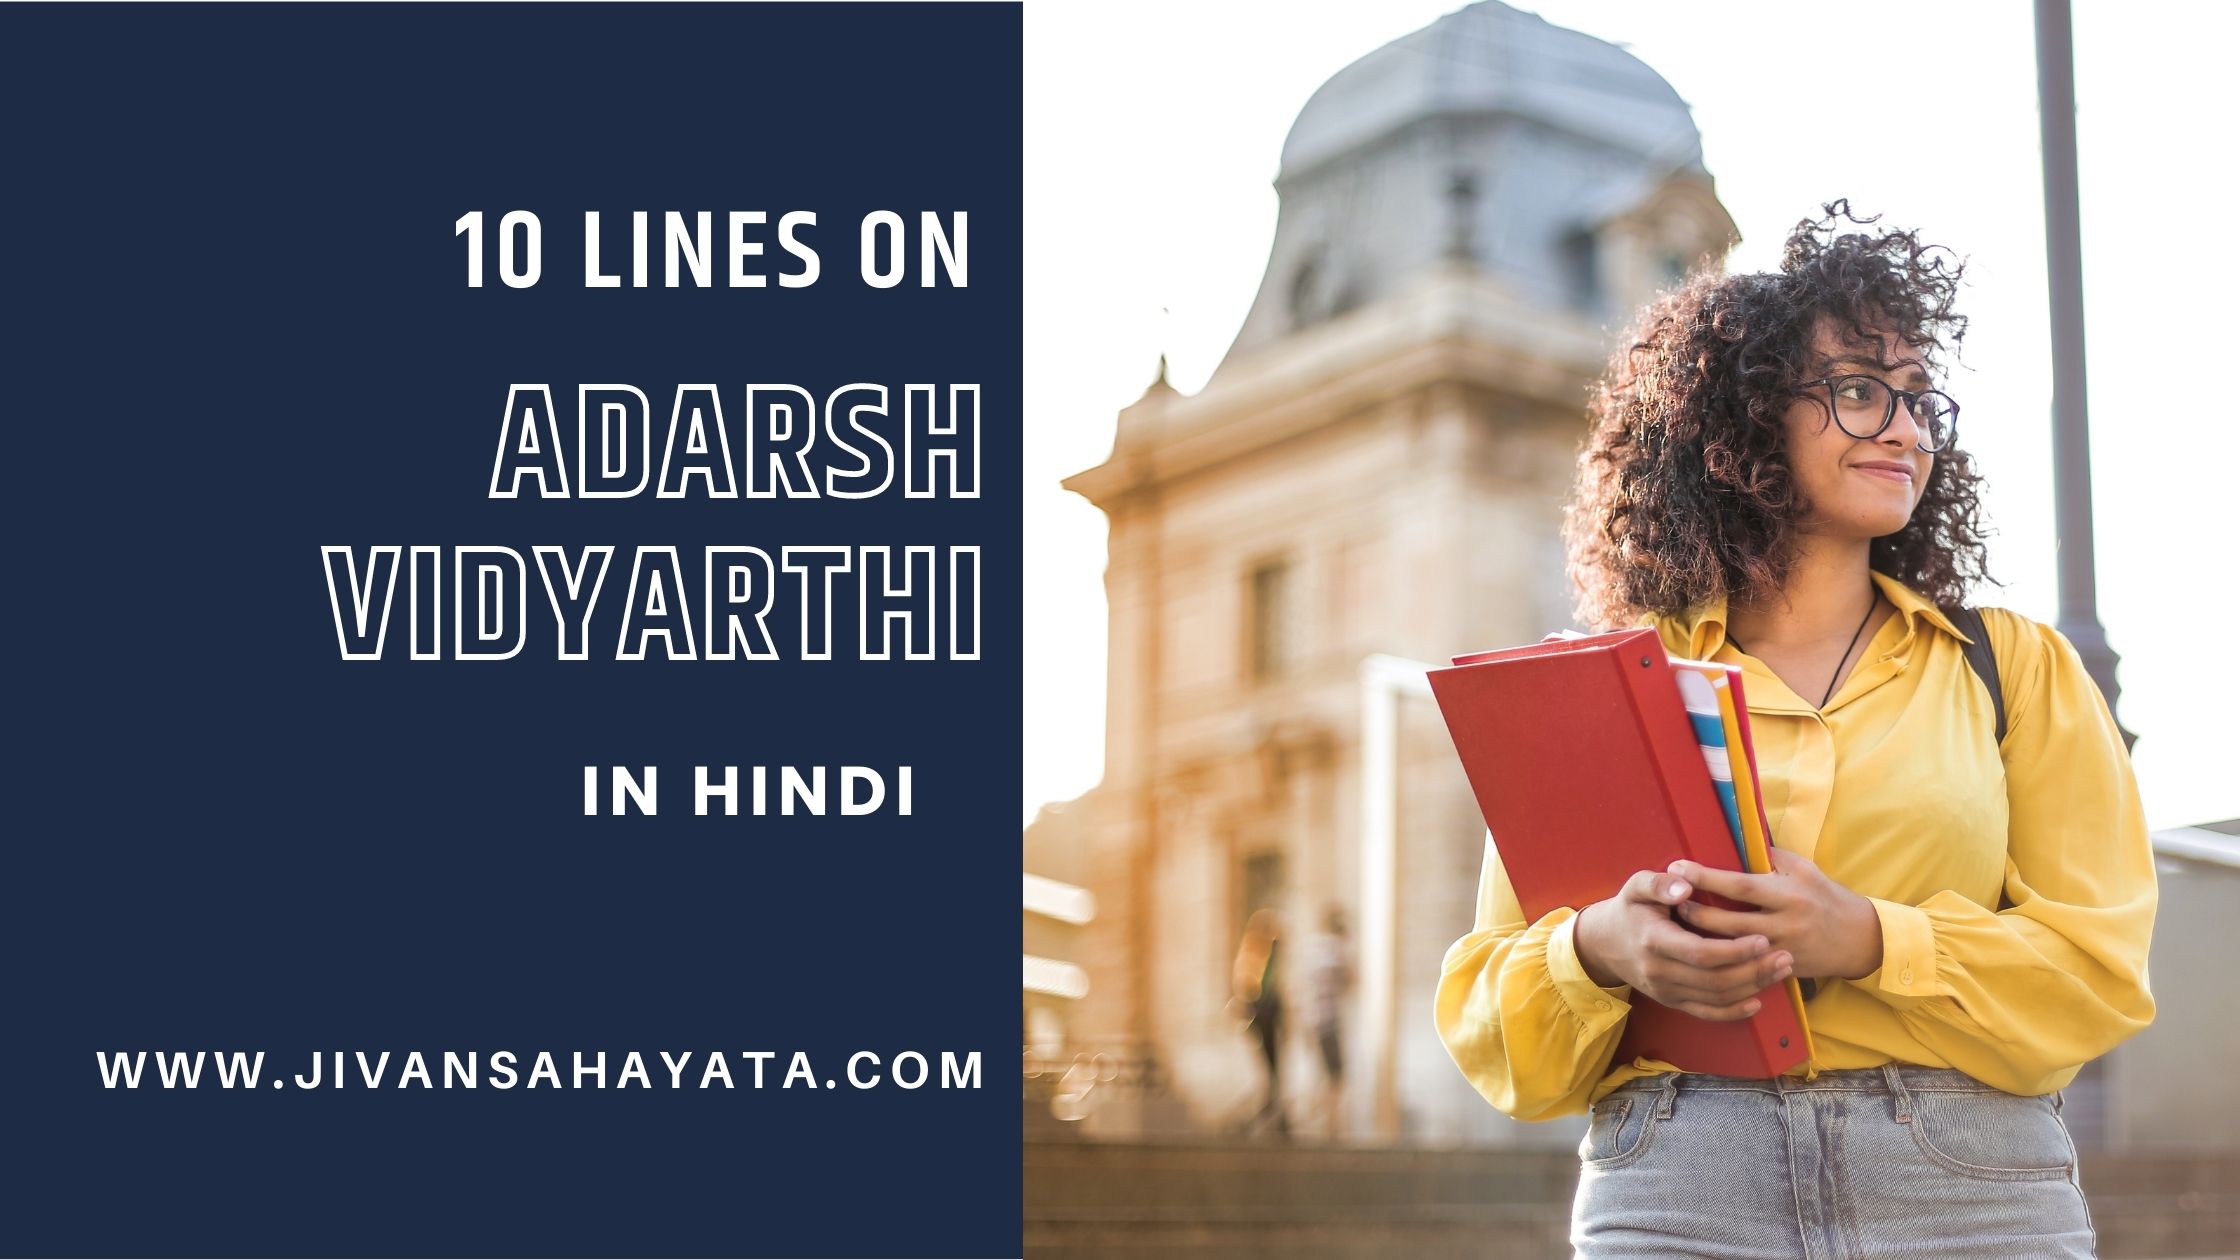 आदर्श विद्यार्थी पर 10 लाइन - 10 lines on Adarsh Vidyarthi in Hindi